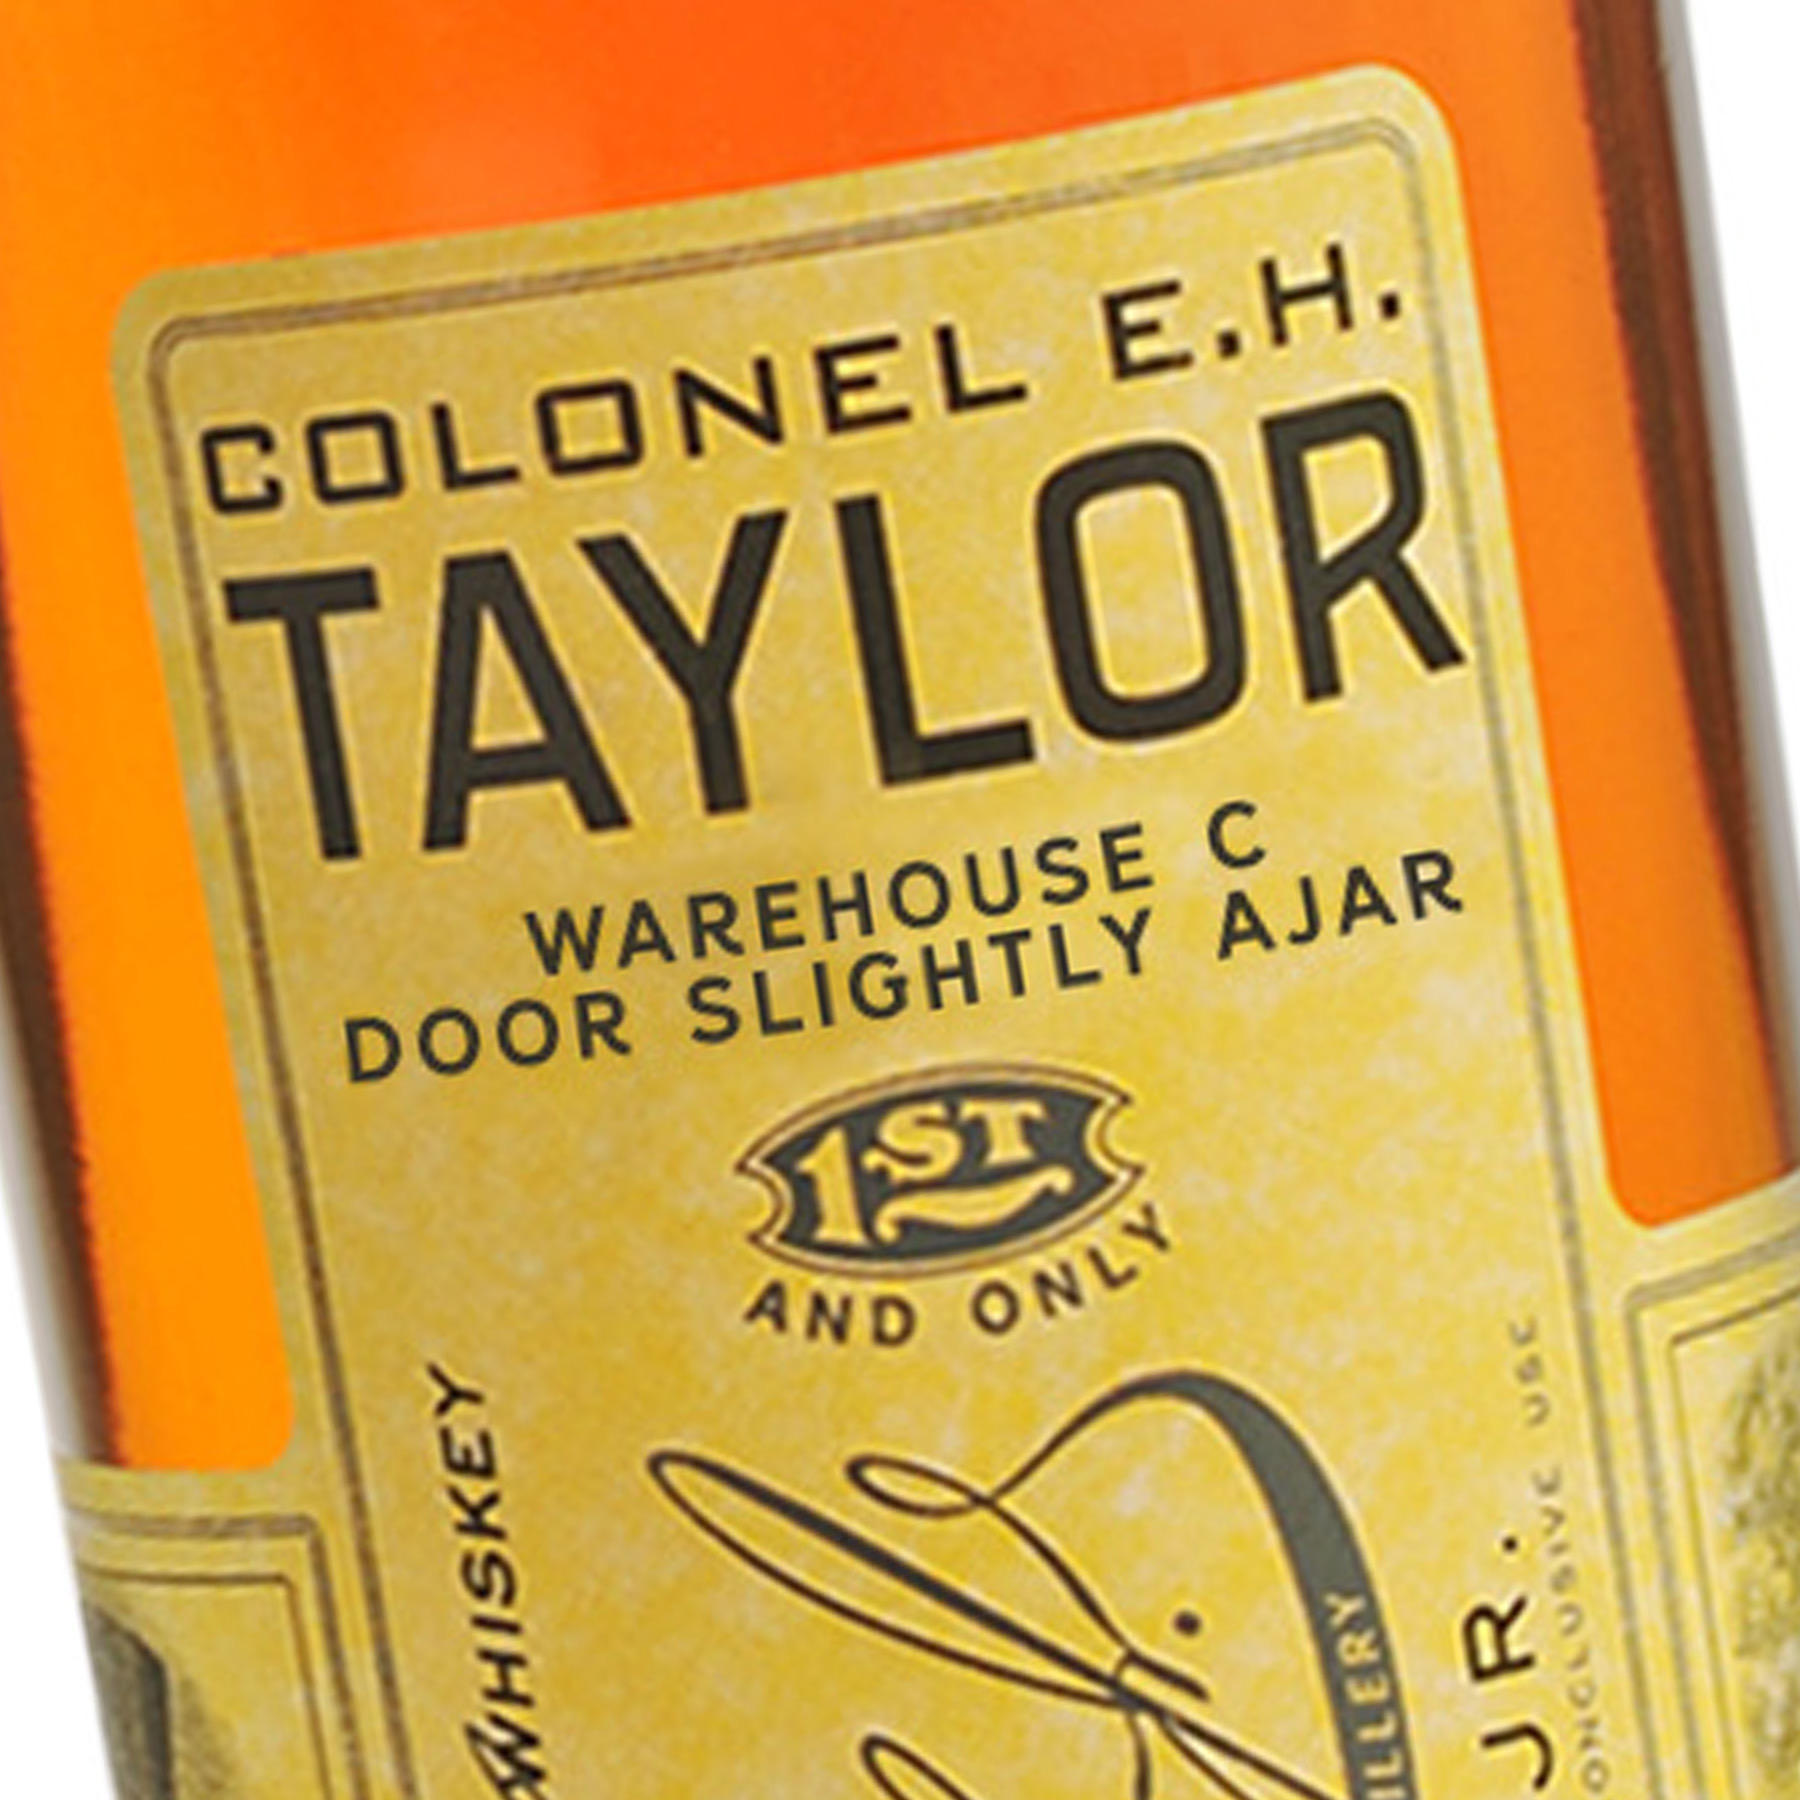 E.H. Taylor Warehouse C Door Slightly Ajar April 1, 2021 Release. Courtesy Wheatly Vodka.